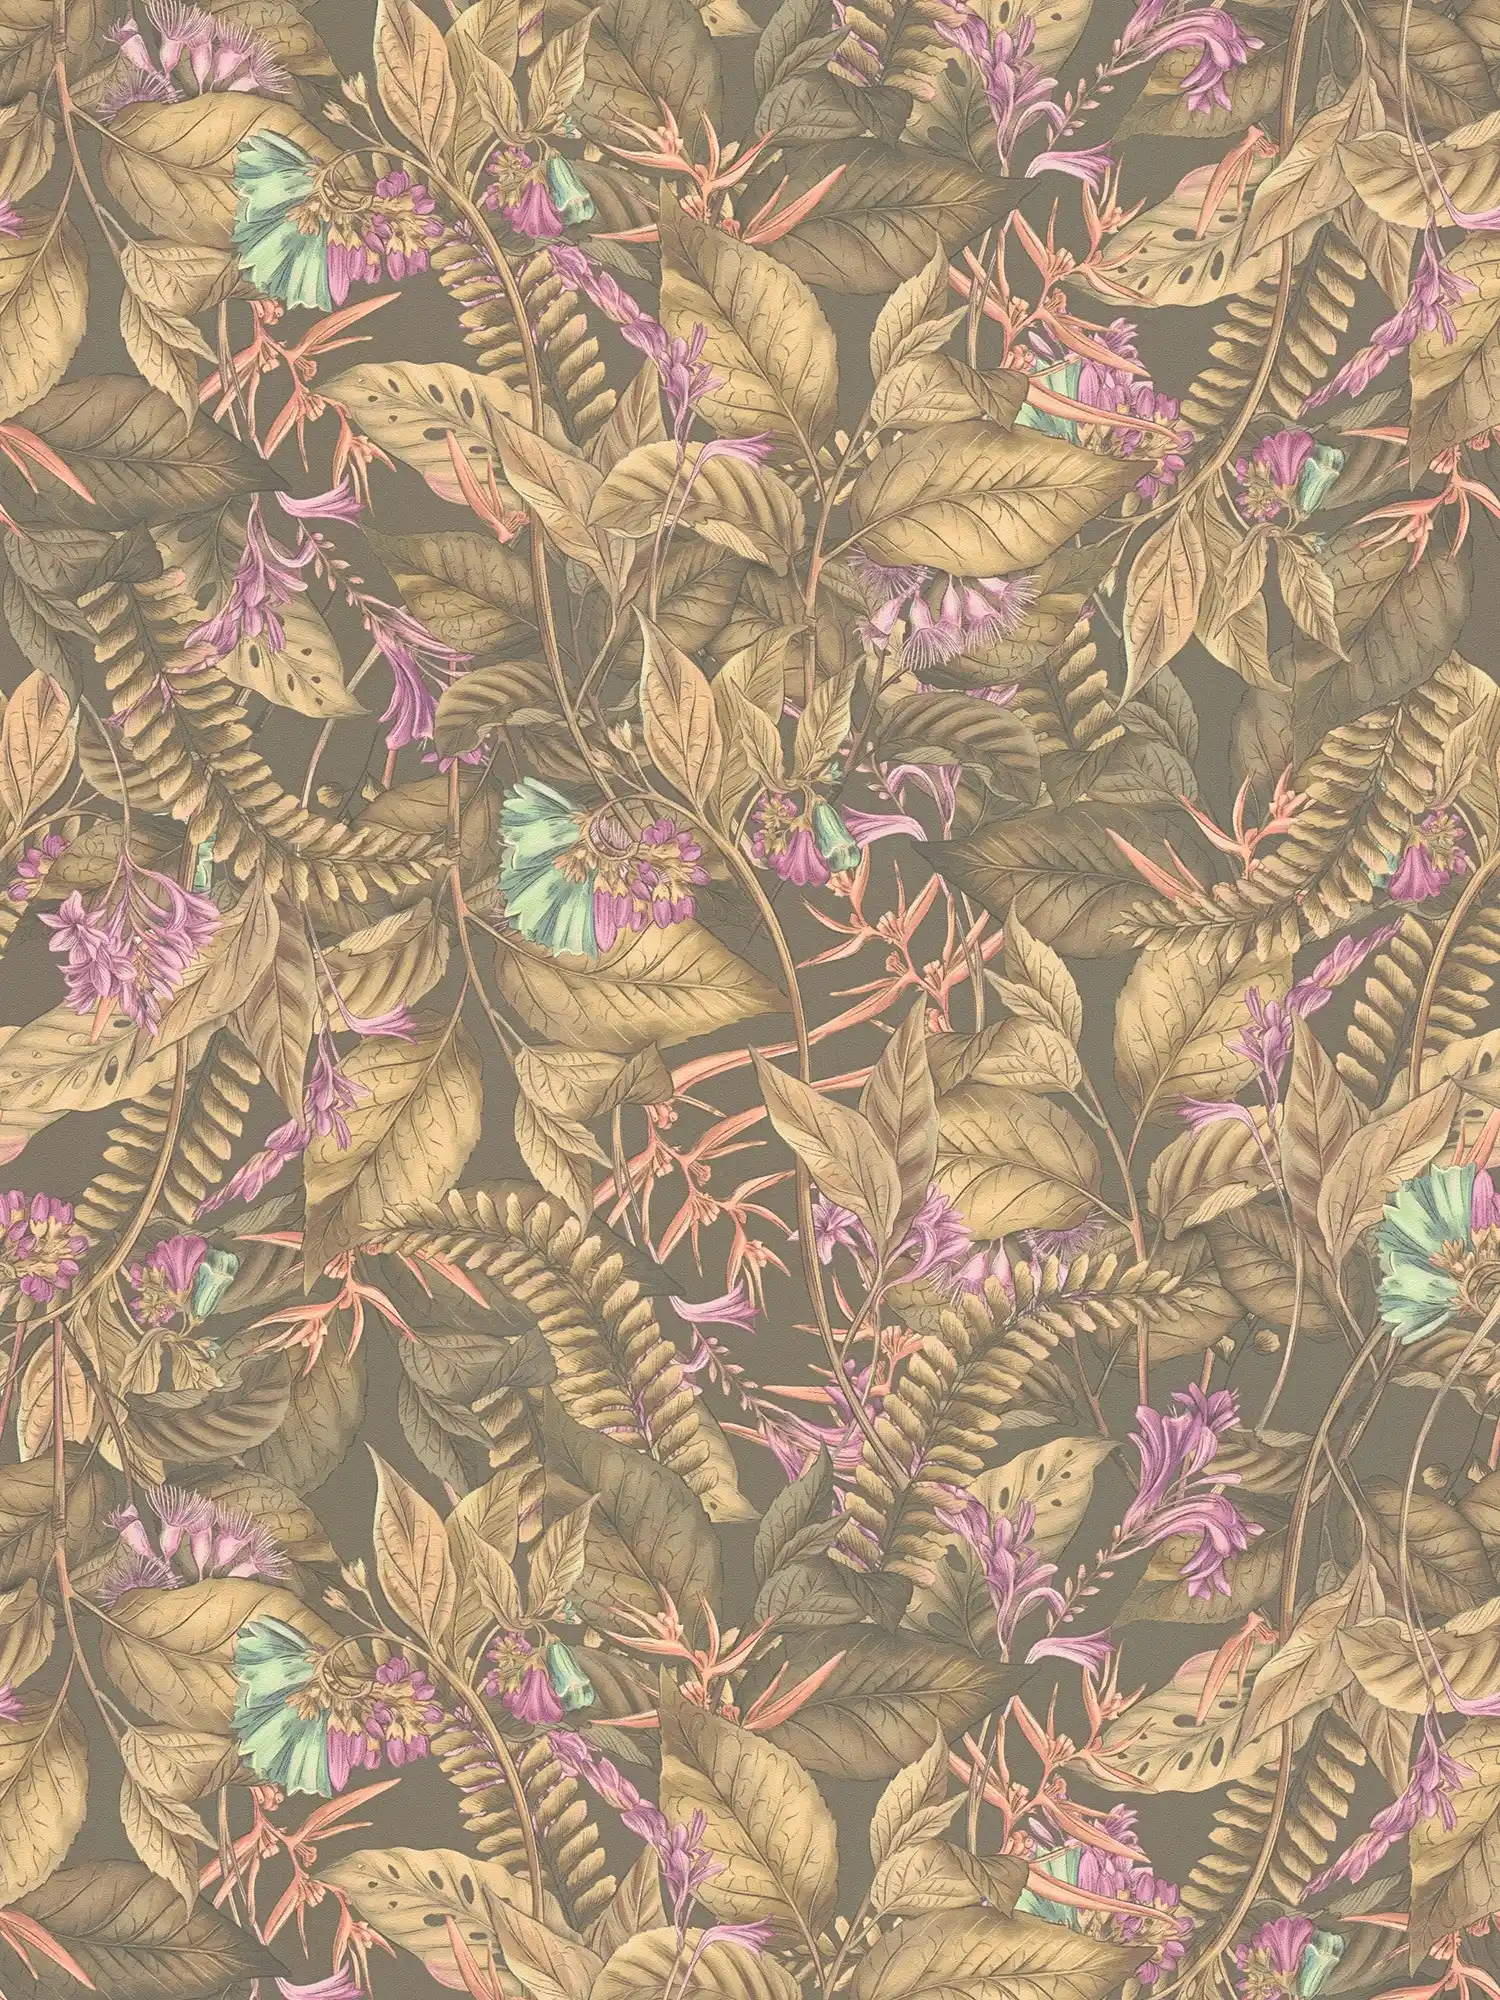 Floral wallpaper with flowers & leaves textured matt - brown, beige, purple
